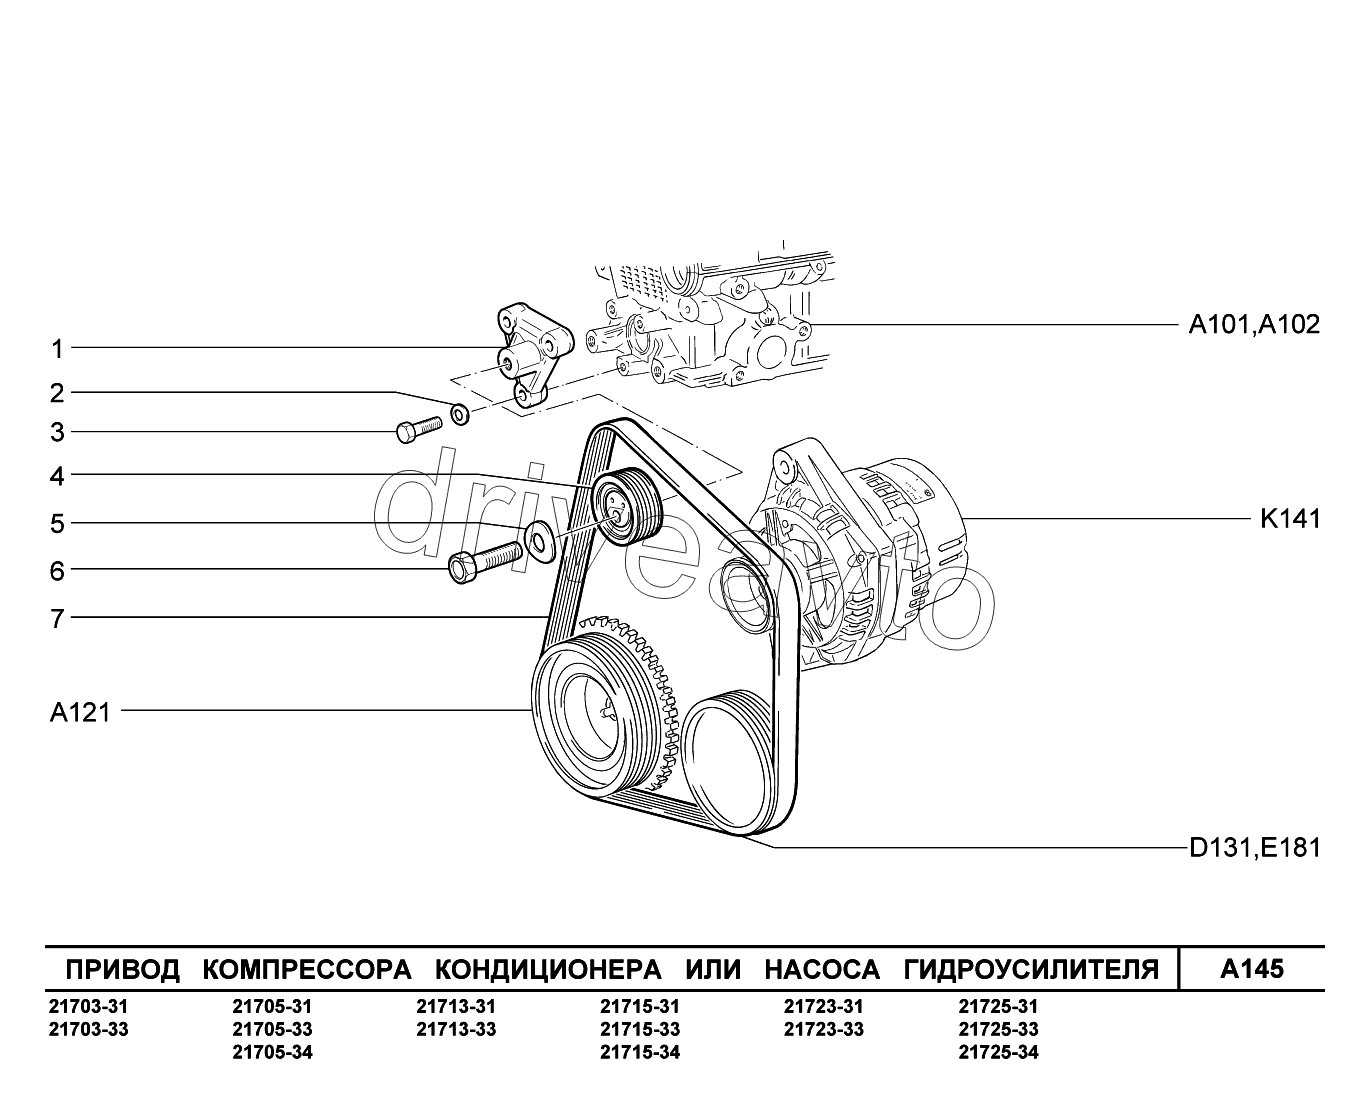 A145. Привод компрессора кондиционера или насоса ГУР